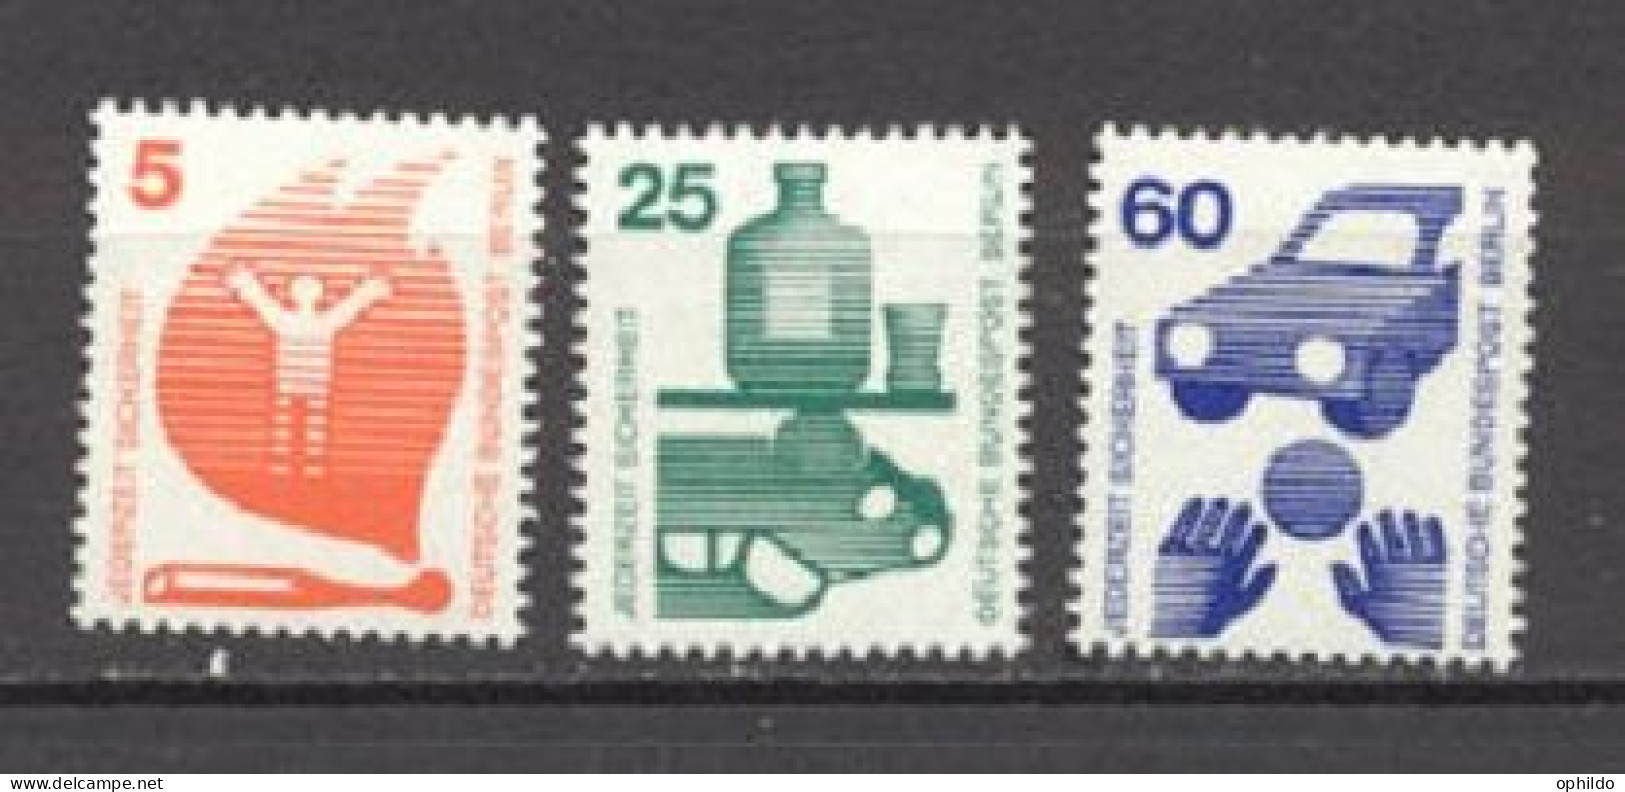 Berlin  378/380  * *  TB  Cote 3.75  Euro   - Unused Stamps